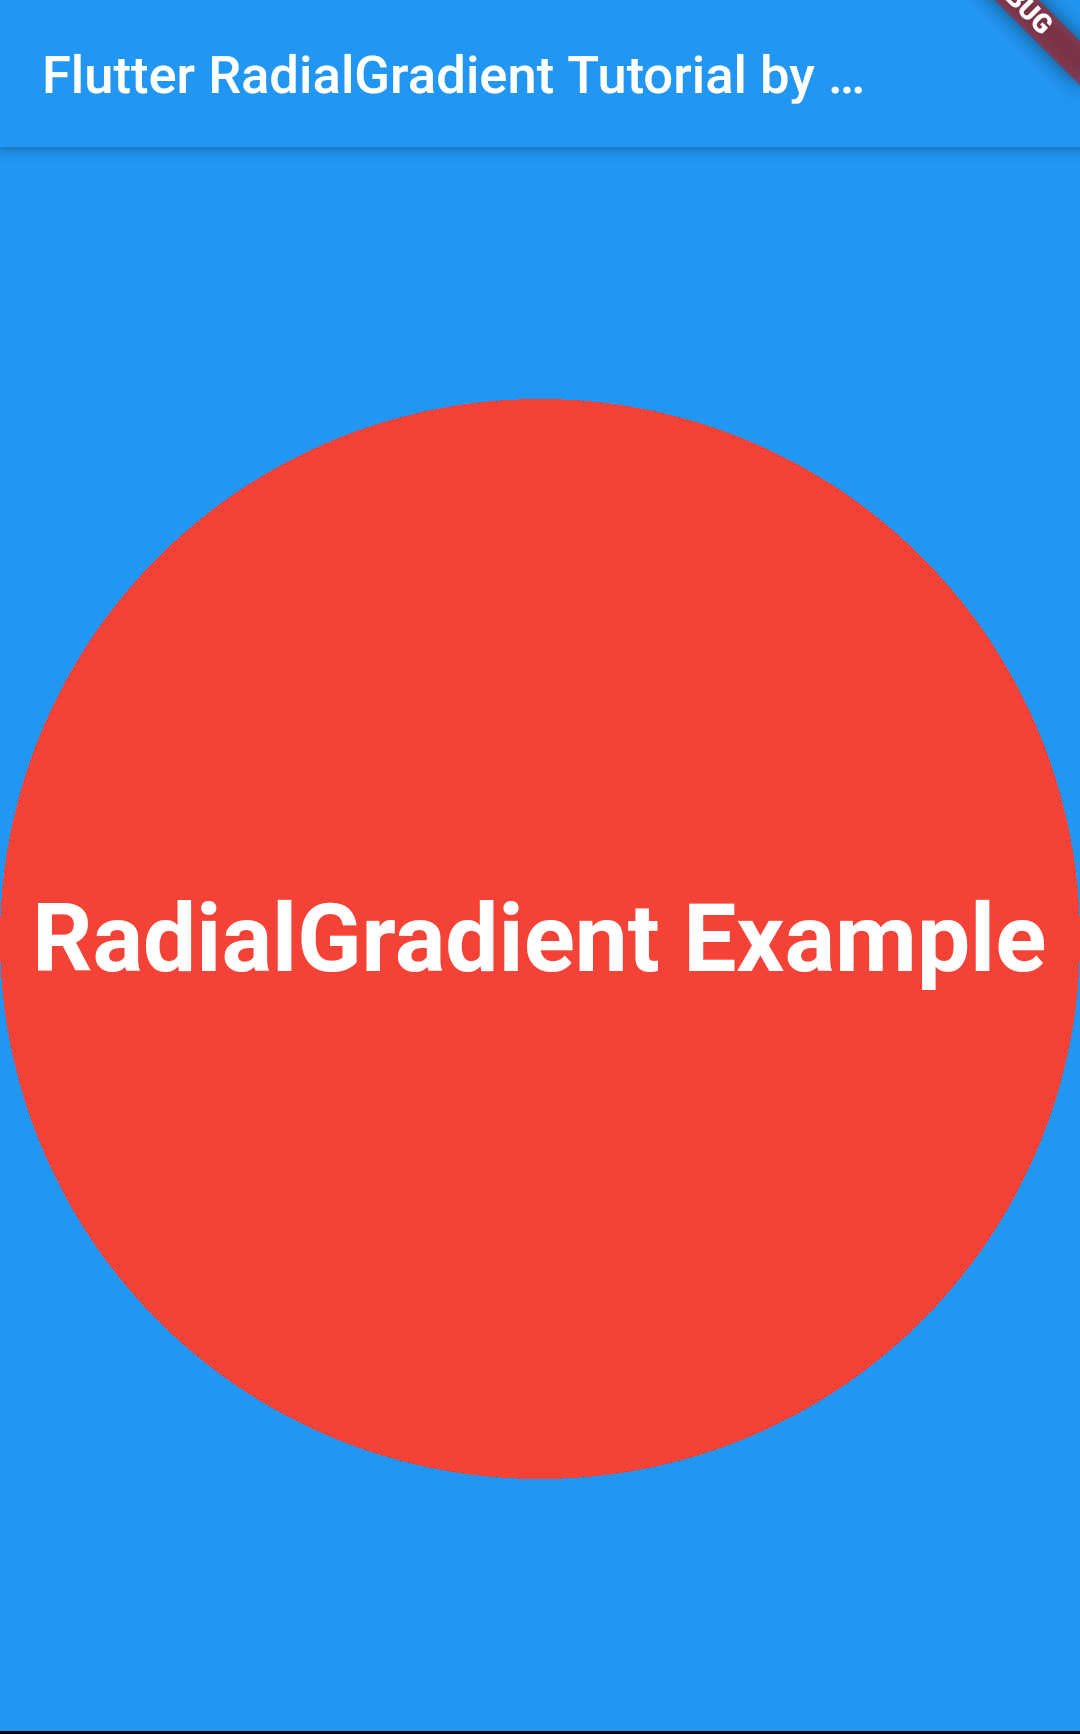 Flutter - RadialGradient - Red and Blue - Stops 0 0